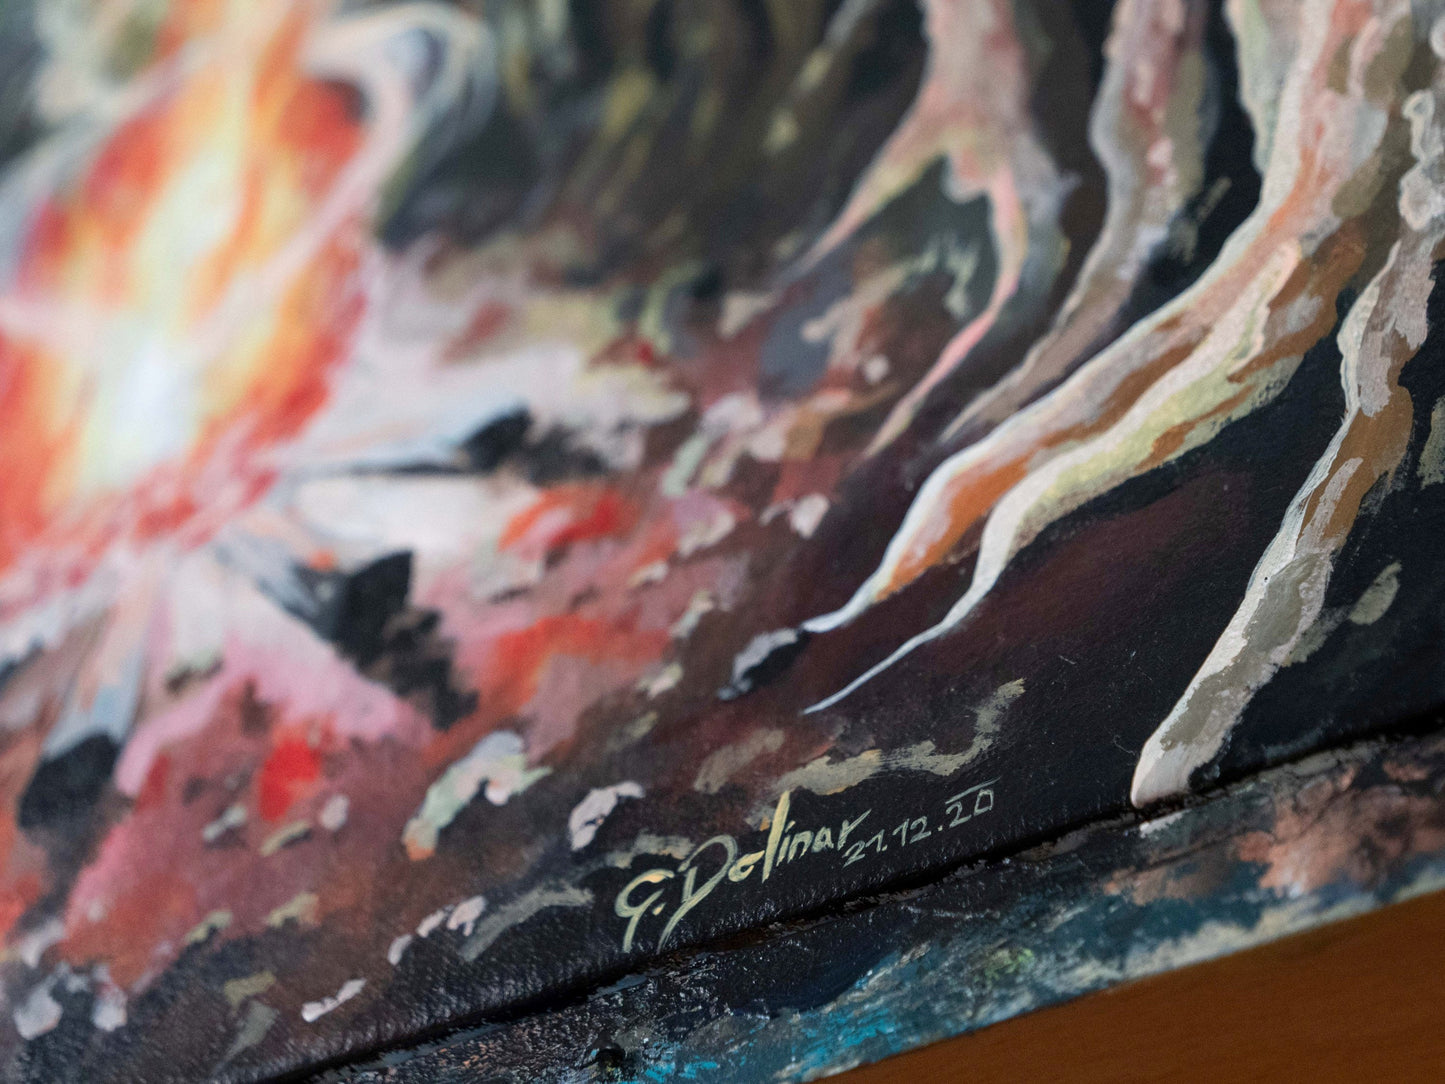 Phoenix Rises - Spirit Animal | Fire Element | Canvas Print